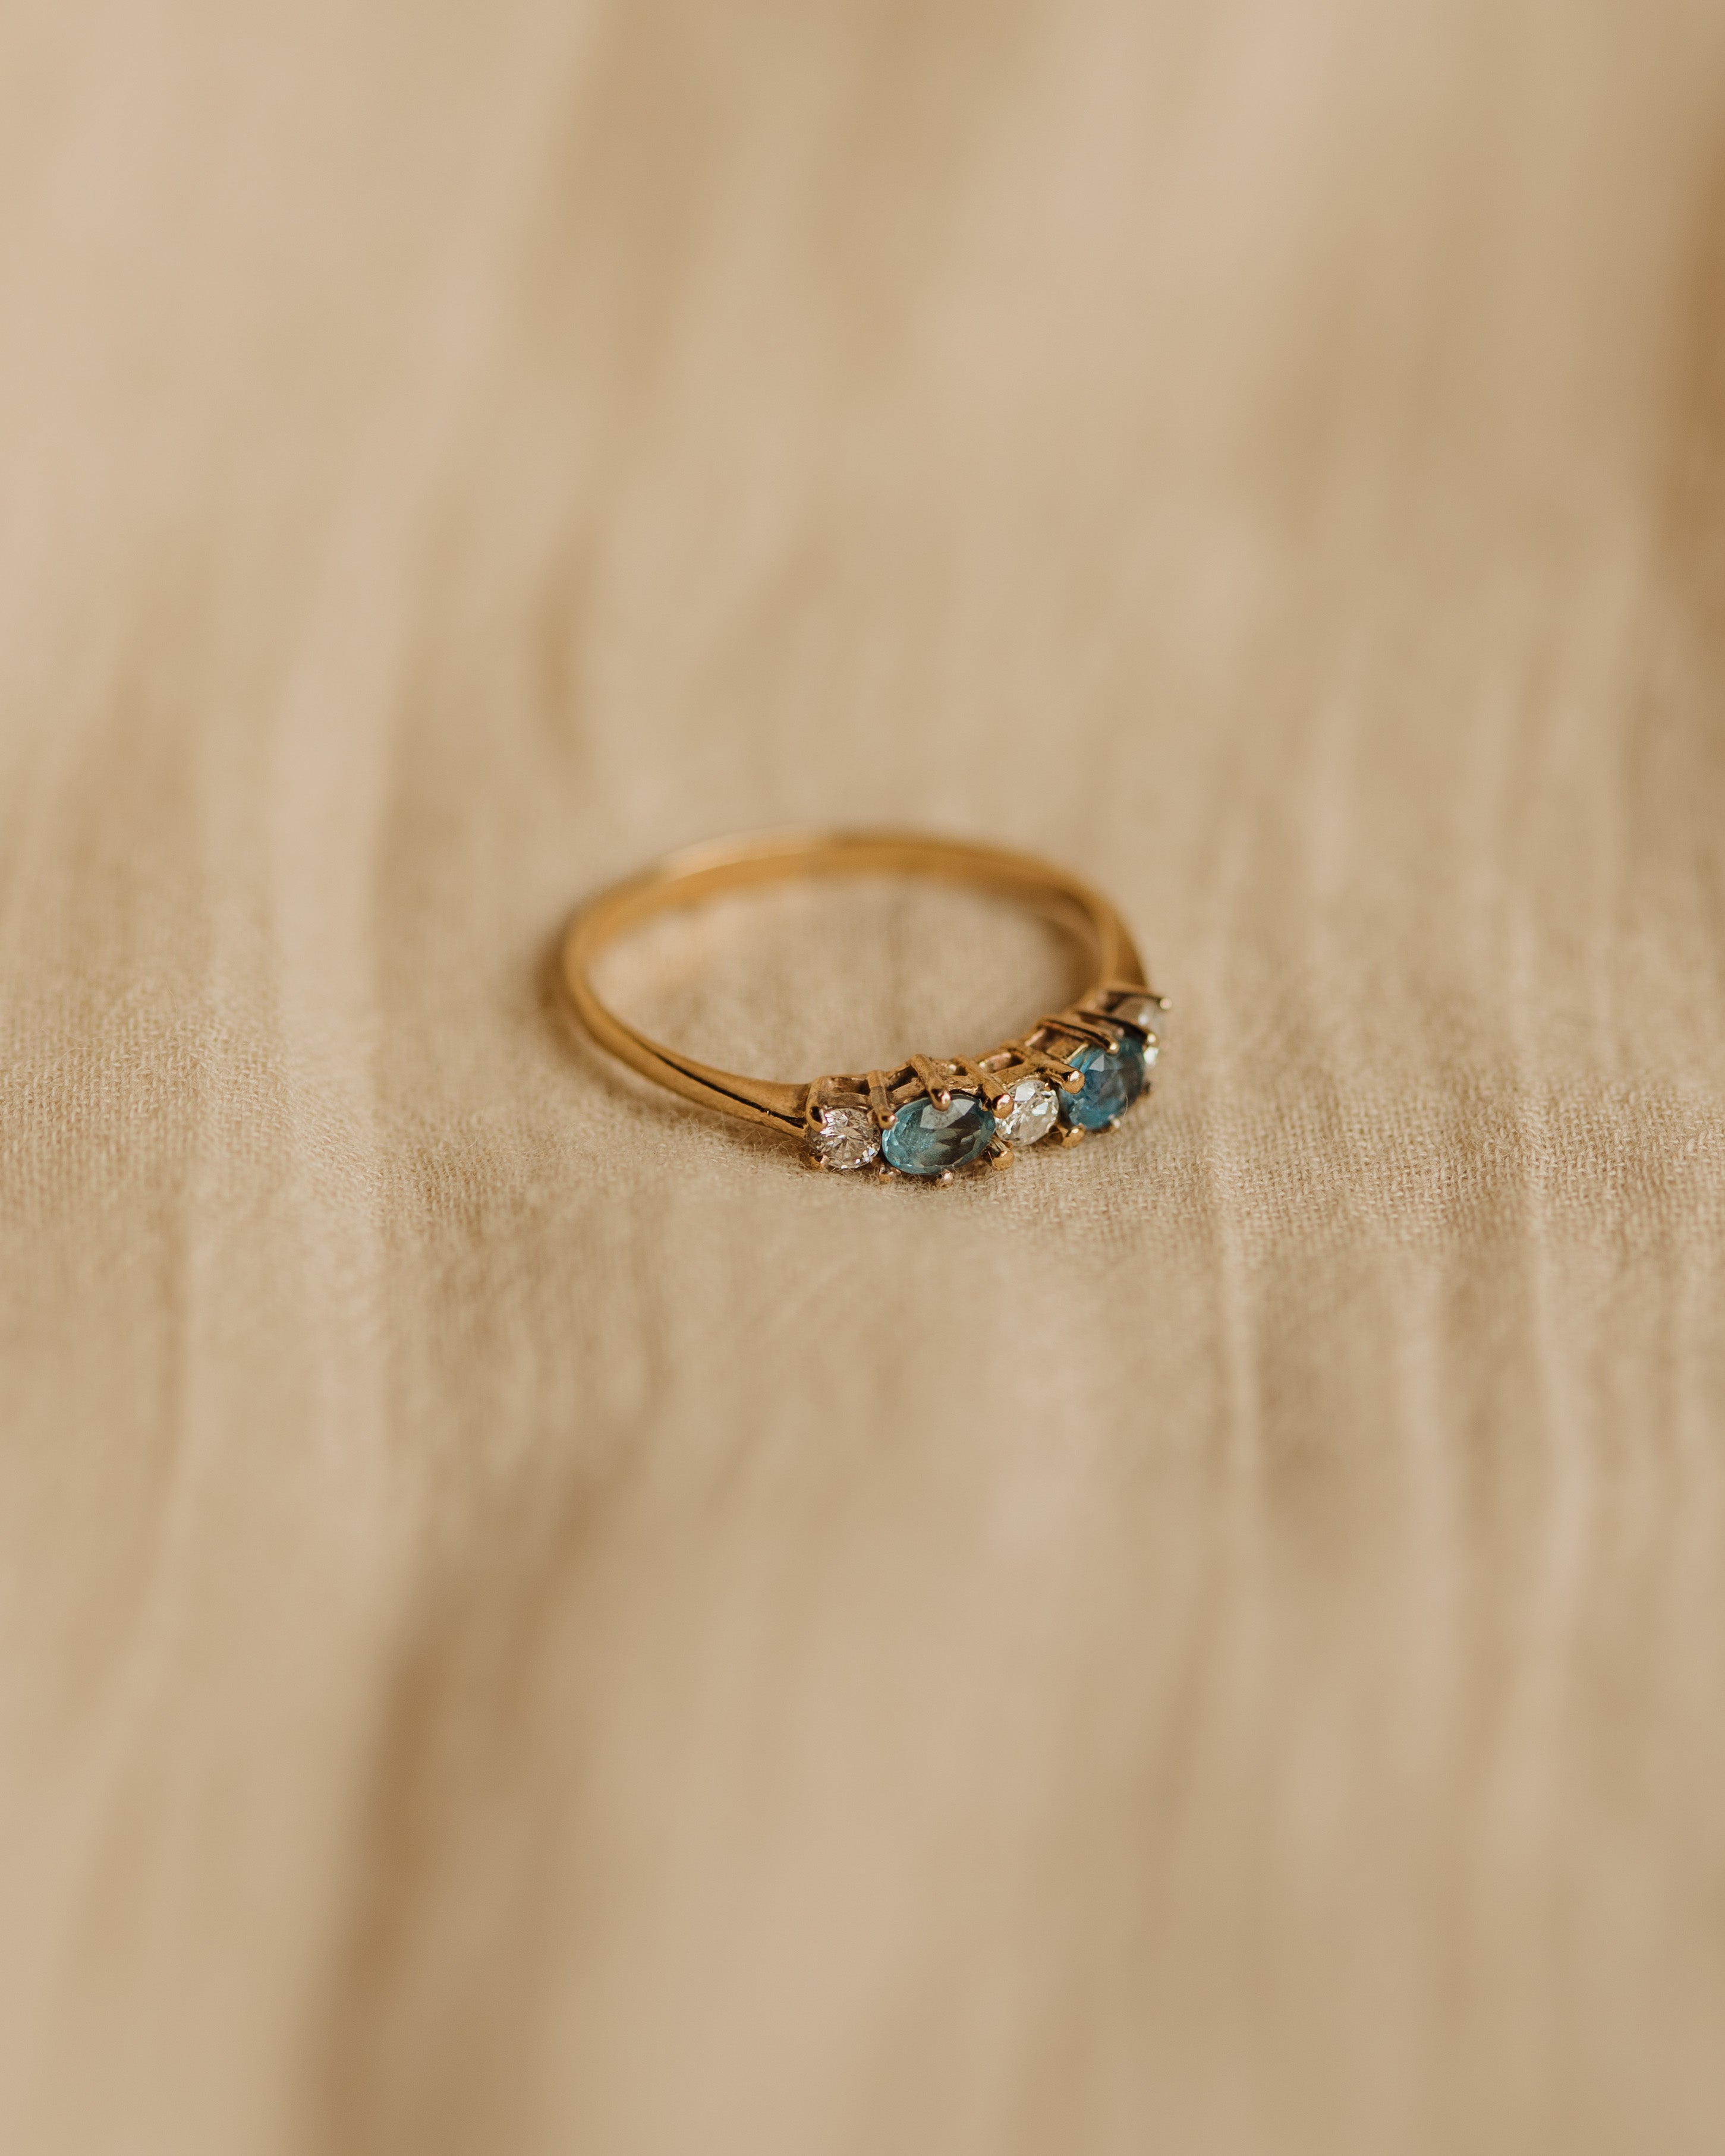 Edith 1989 9ct Gold Blue Topaz & Diamond Ring